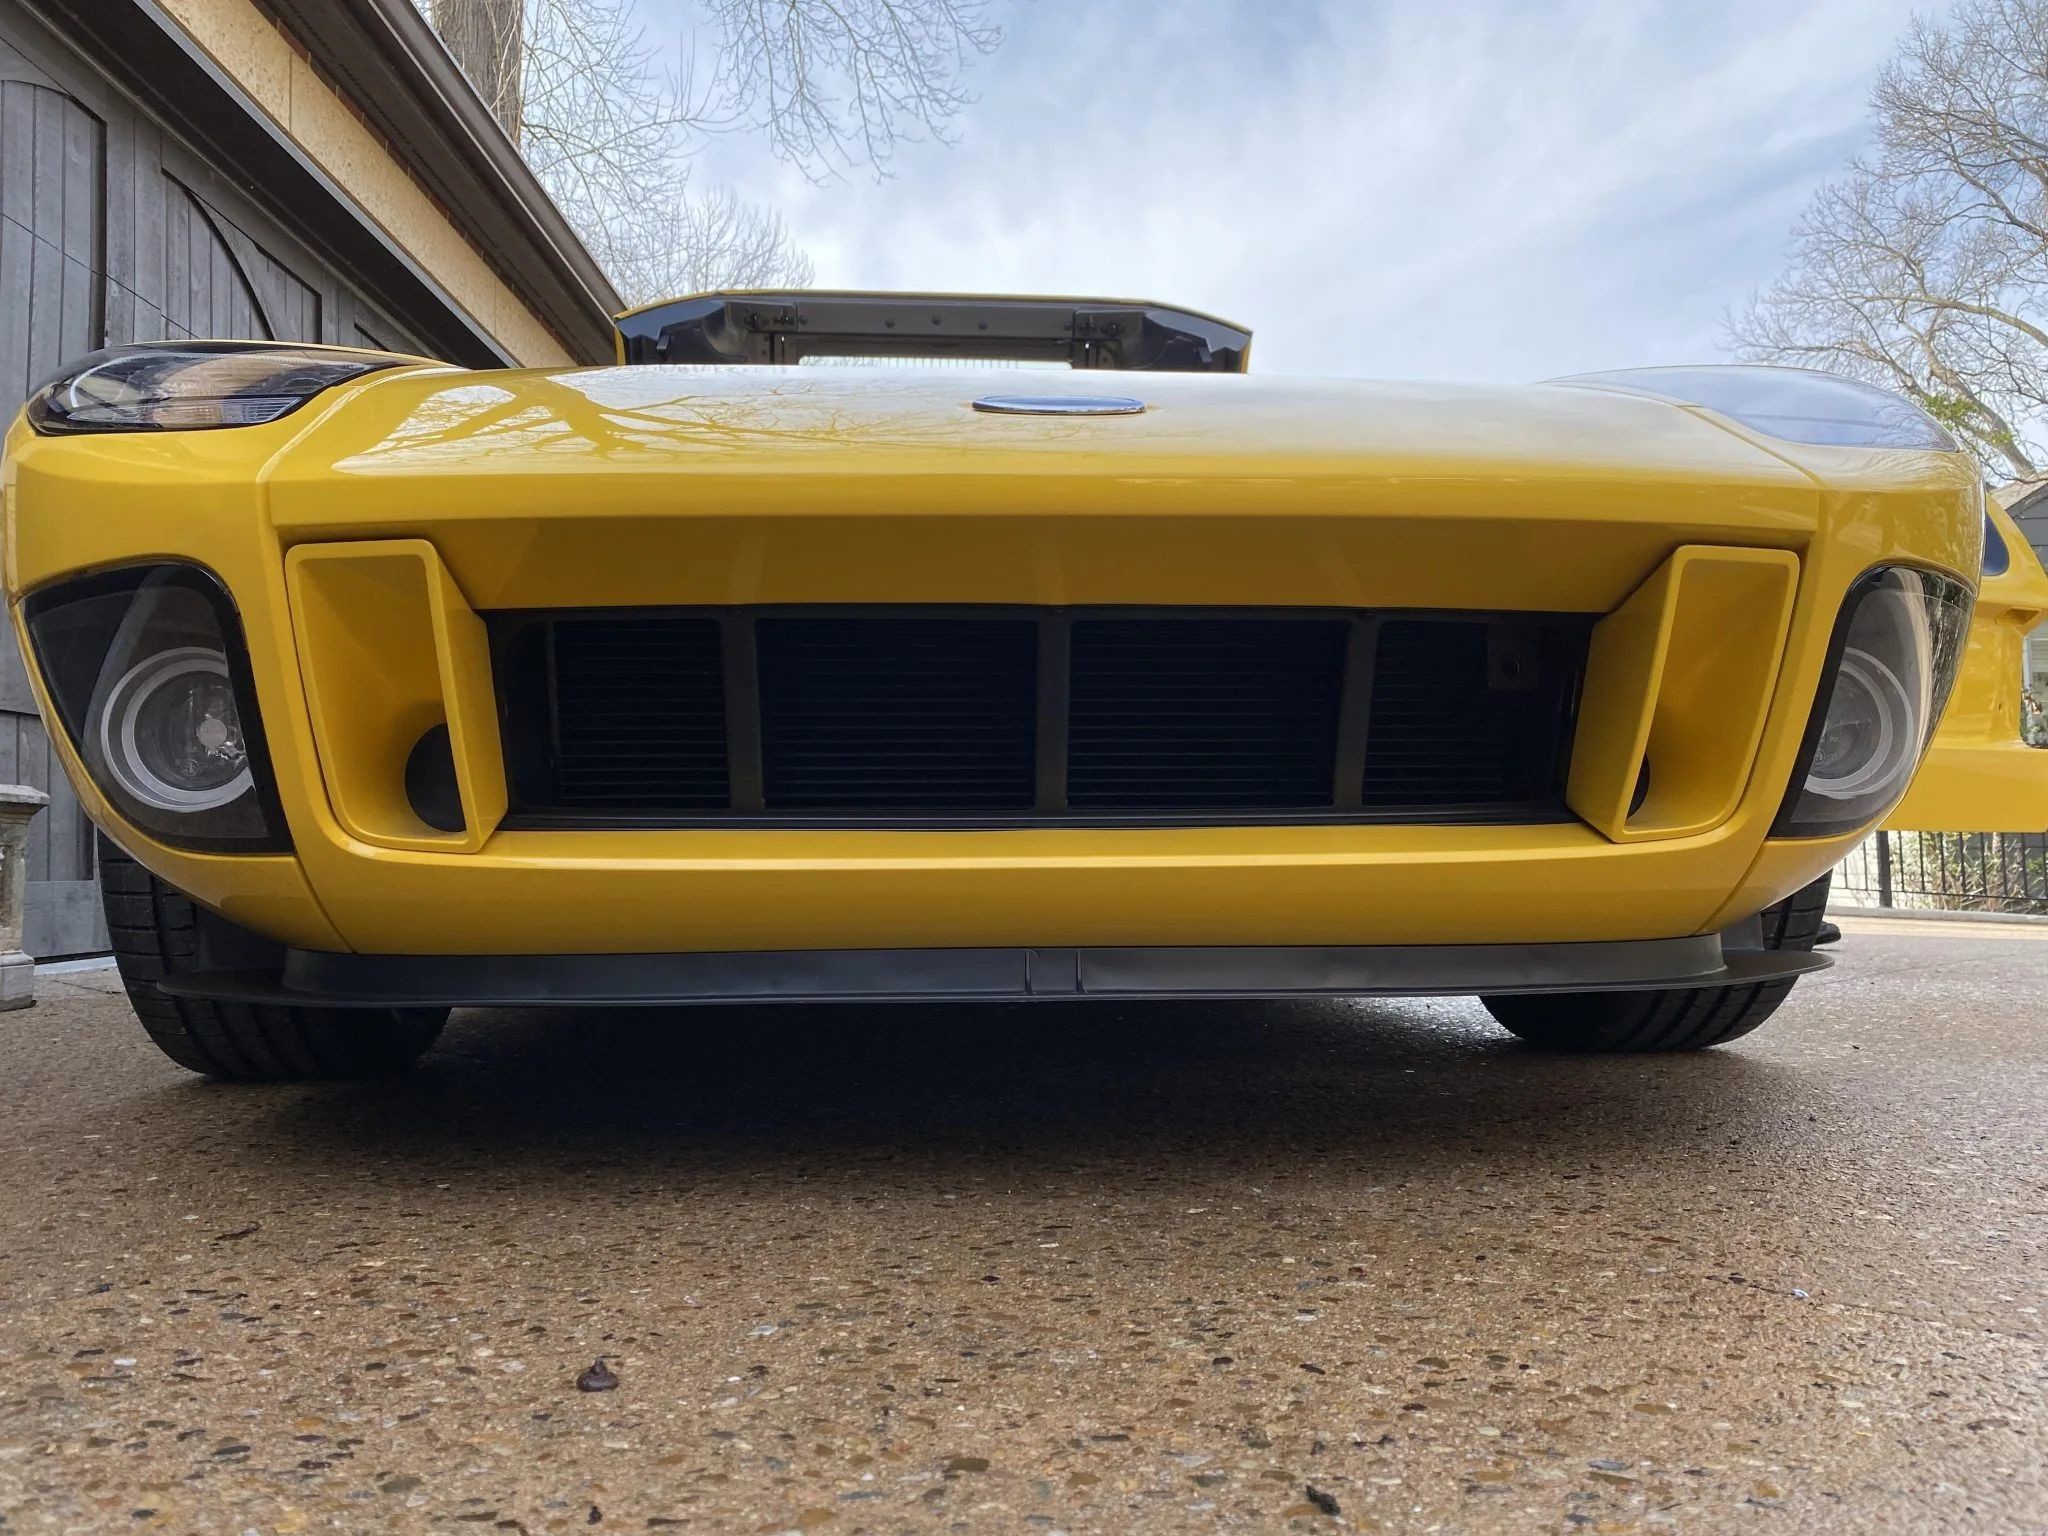 Редкий Ford GT практически без пробега за полмиллиона долларов